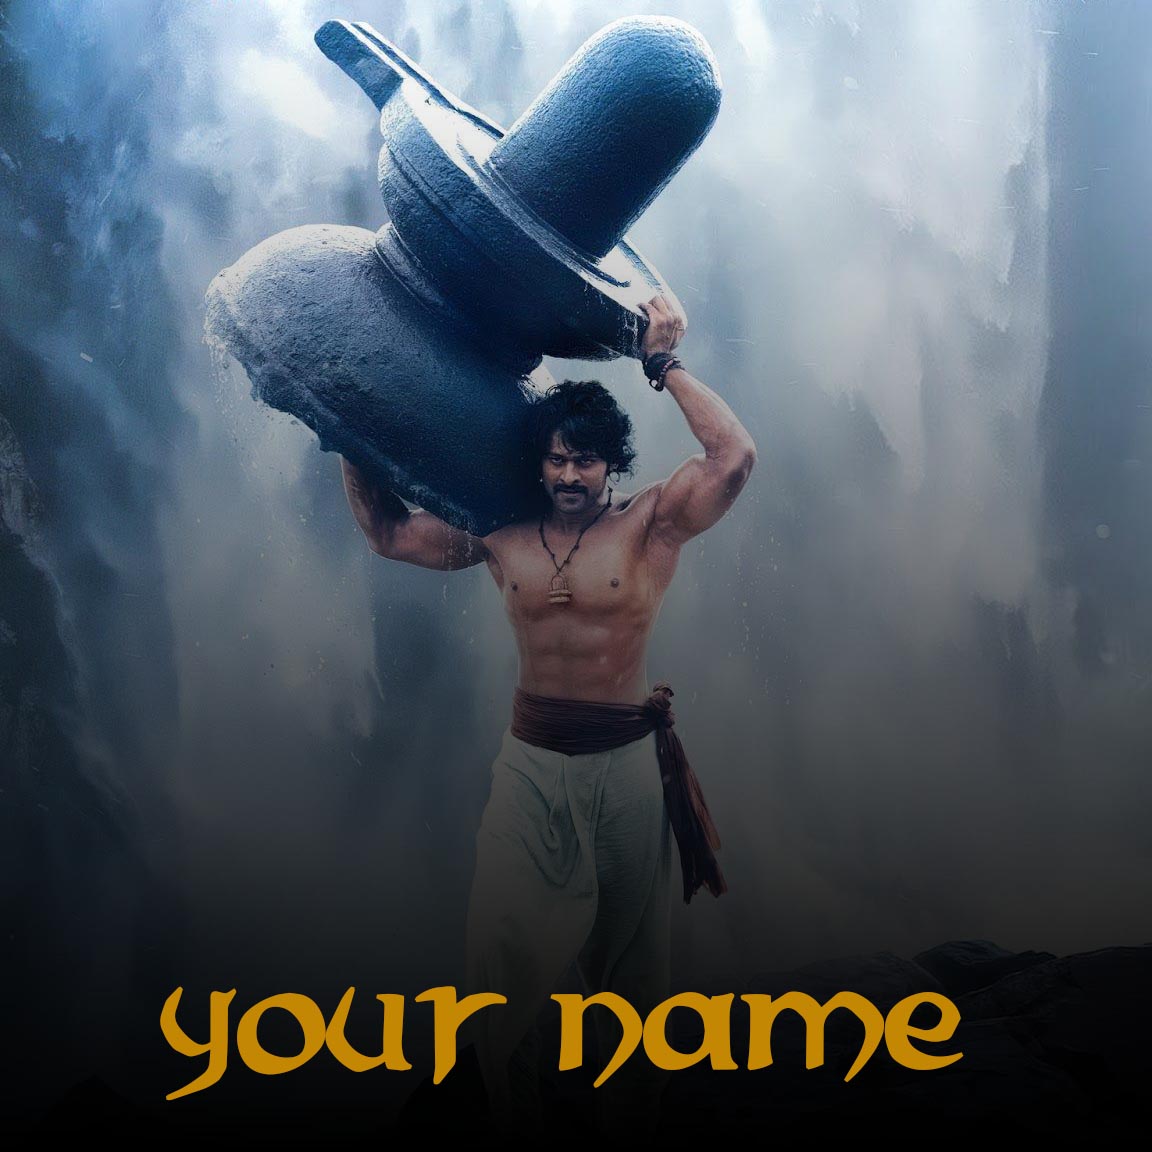 Bahubali Movie font generator